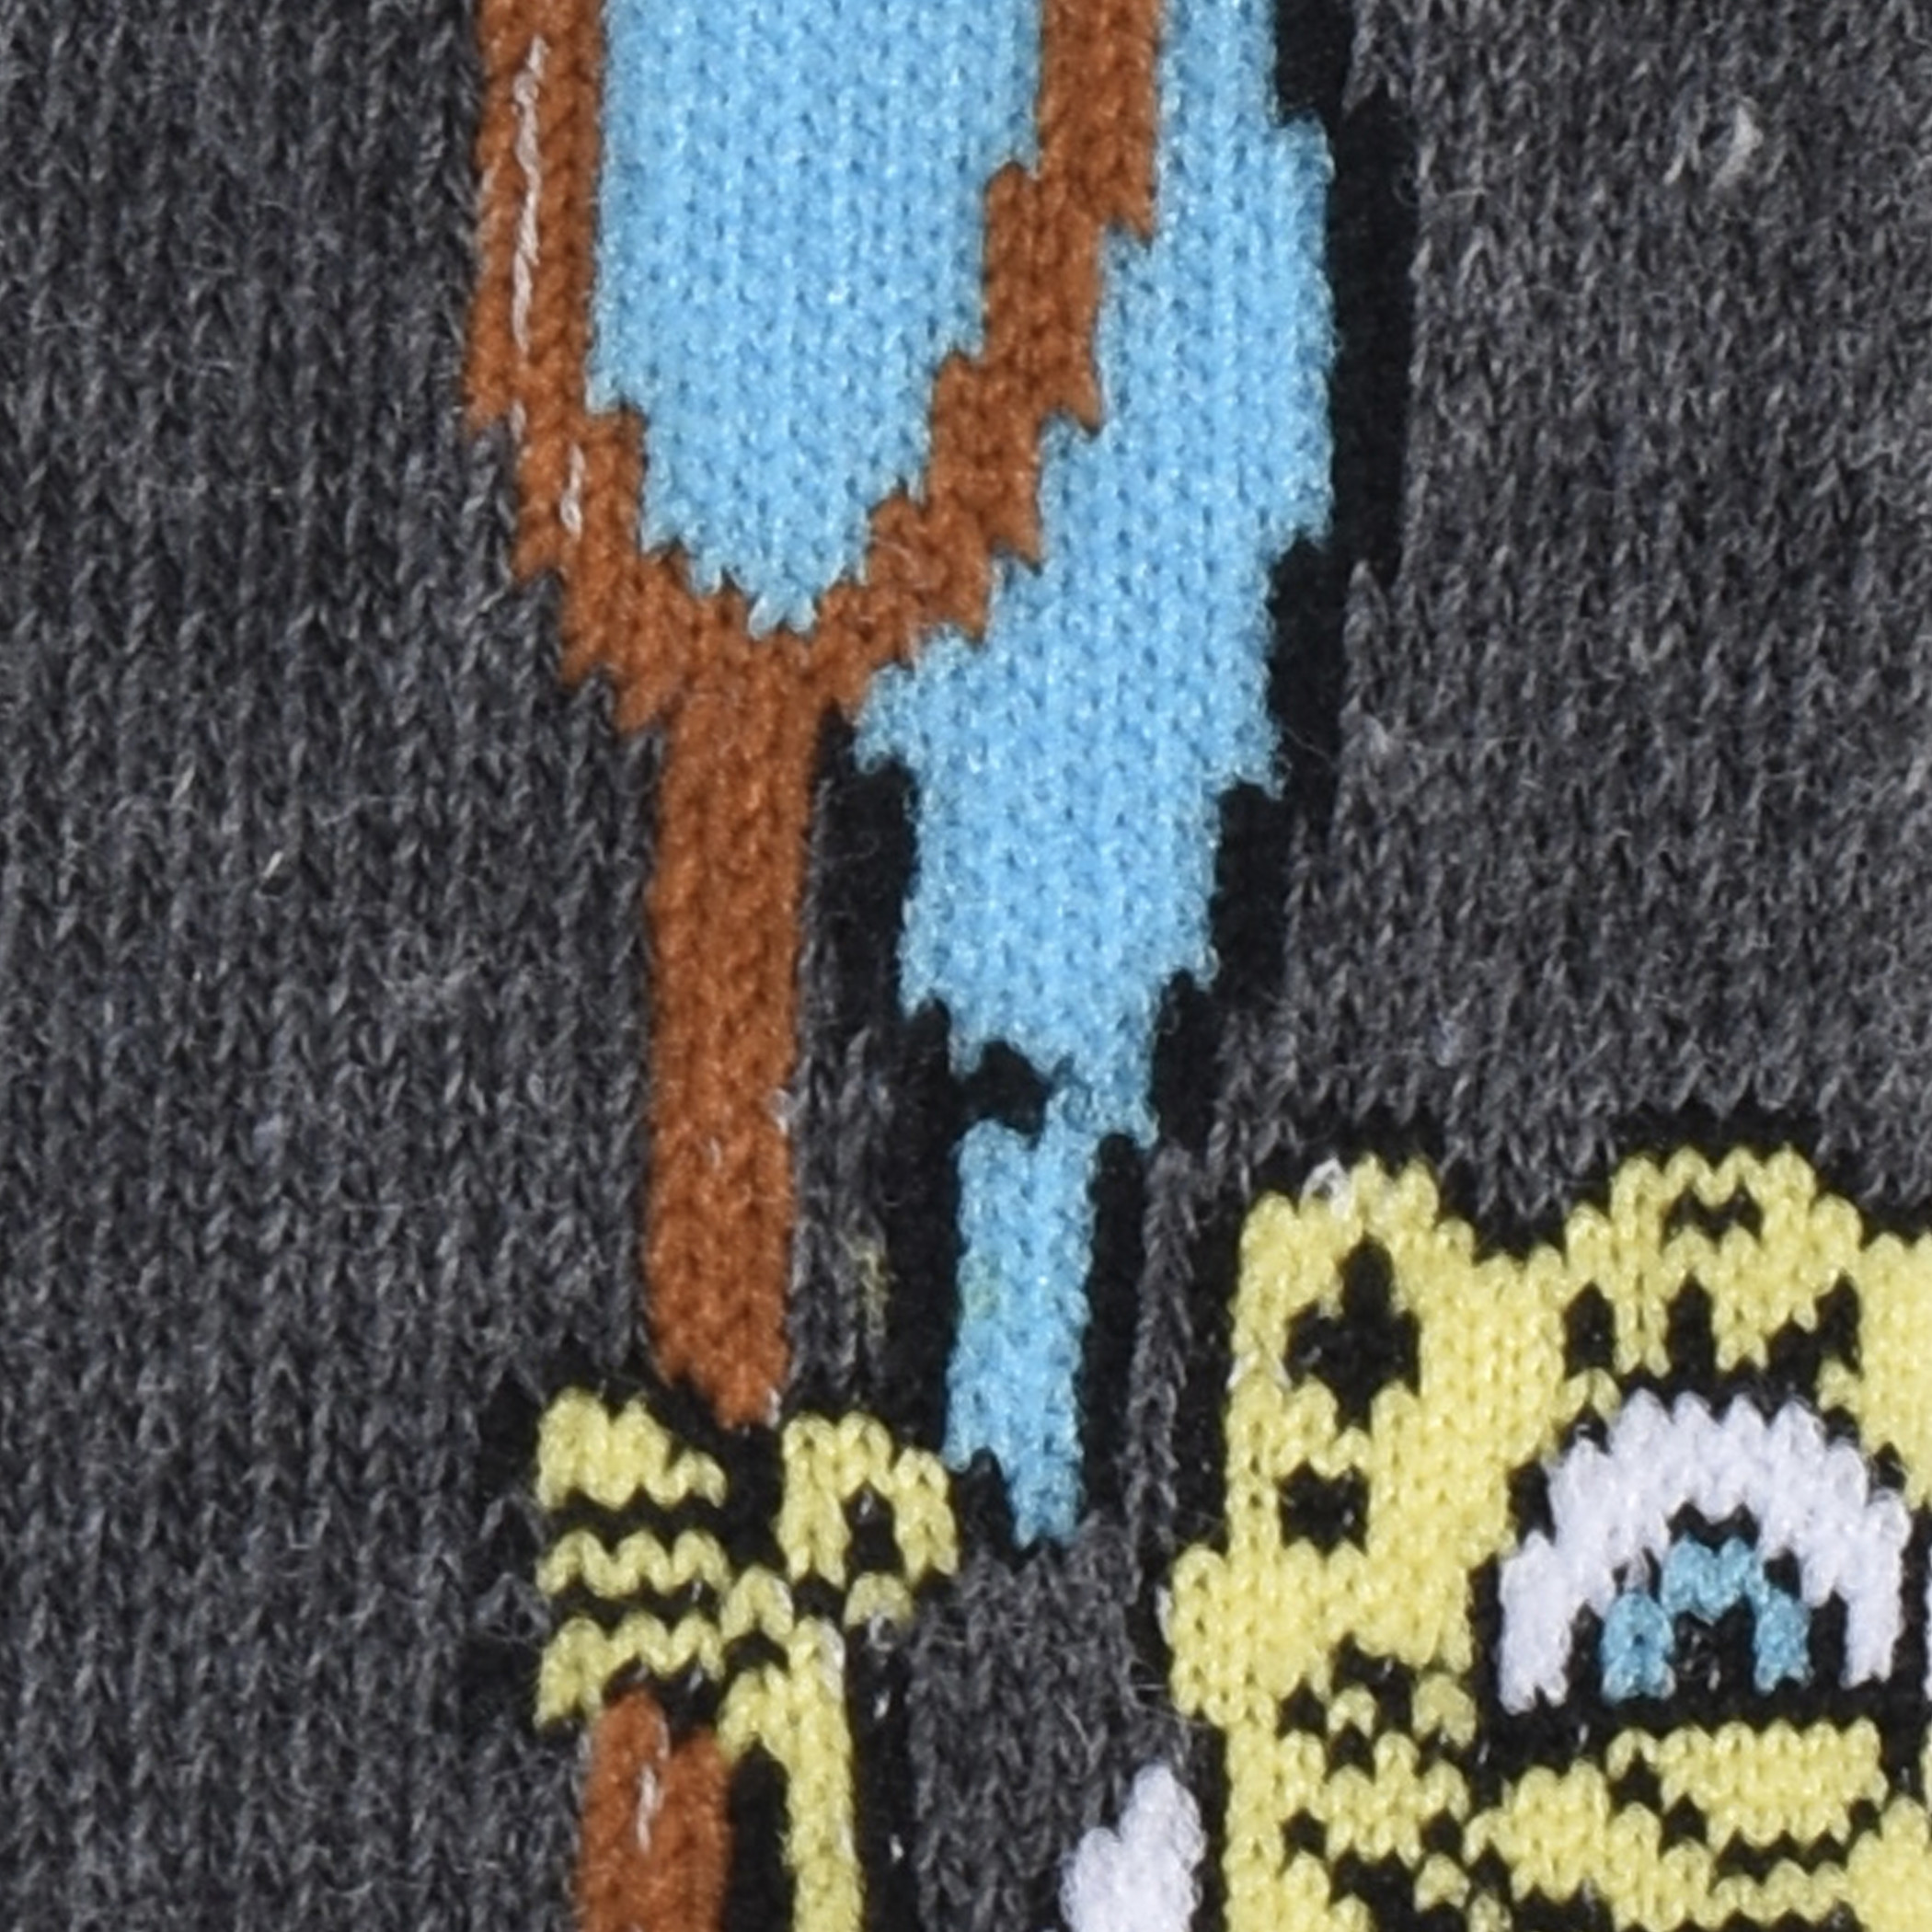 SpongeBob and Patrick Friendship Crew Socks 2-Pair Pack